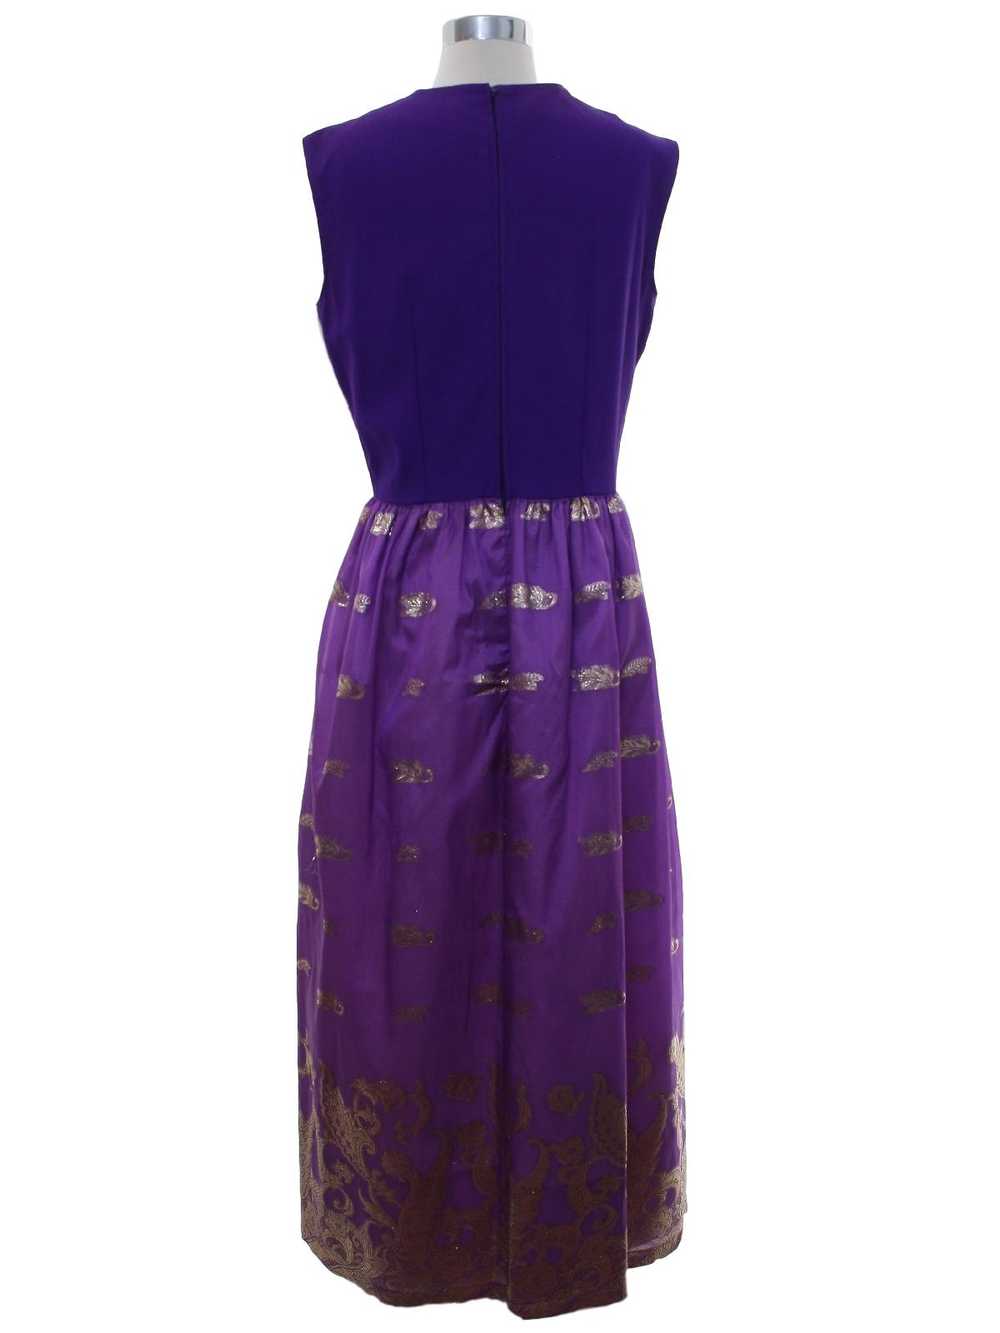 1960's Mod Cocktail Dress - image 3